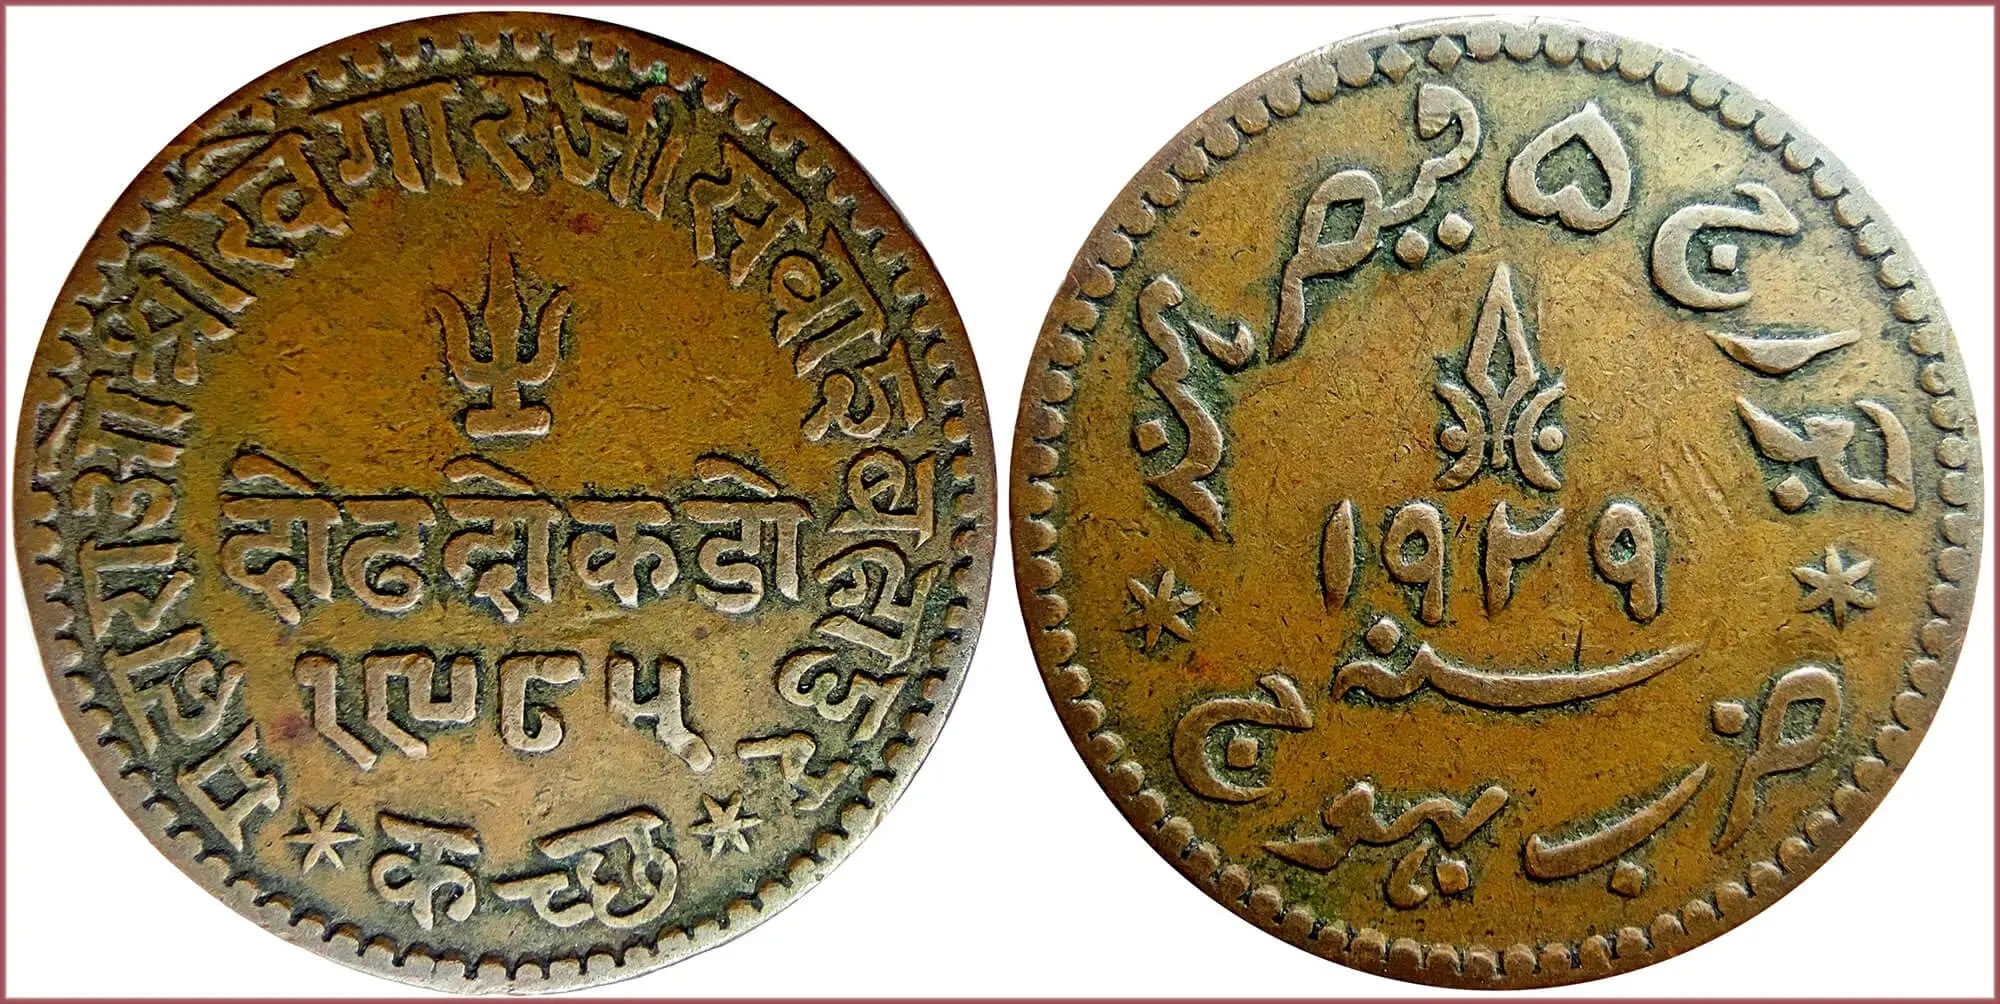 1,5 dokdo, 1929: Princely State of Kutch (India)